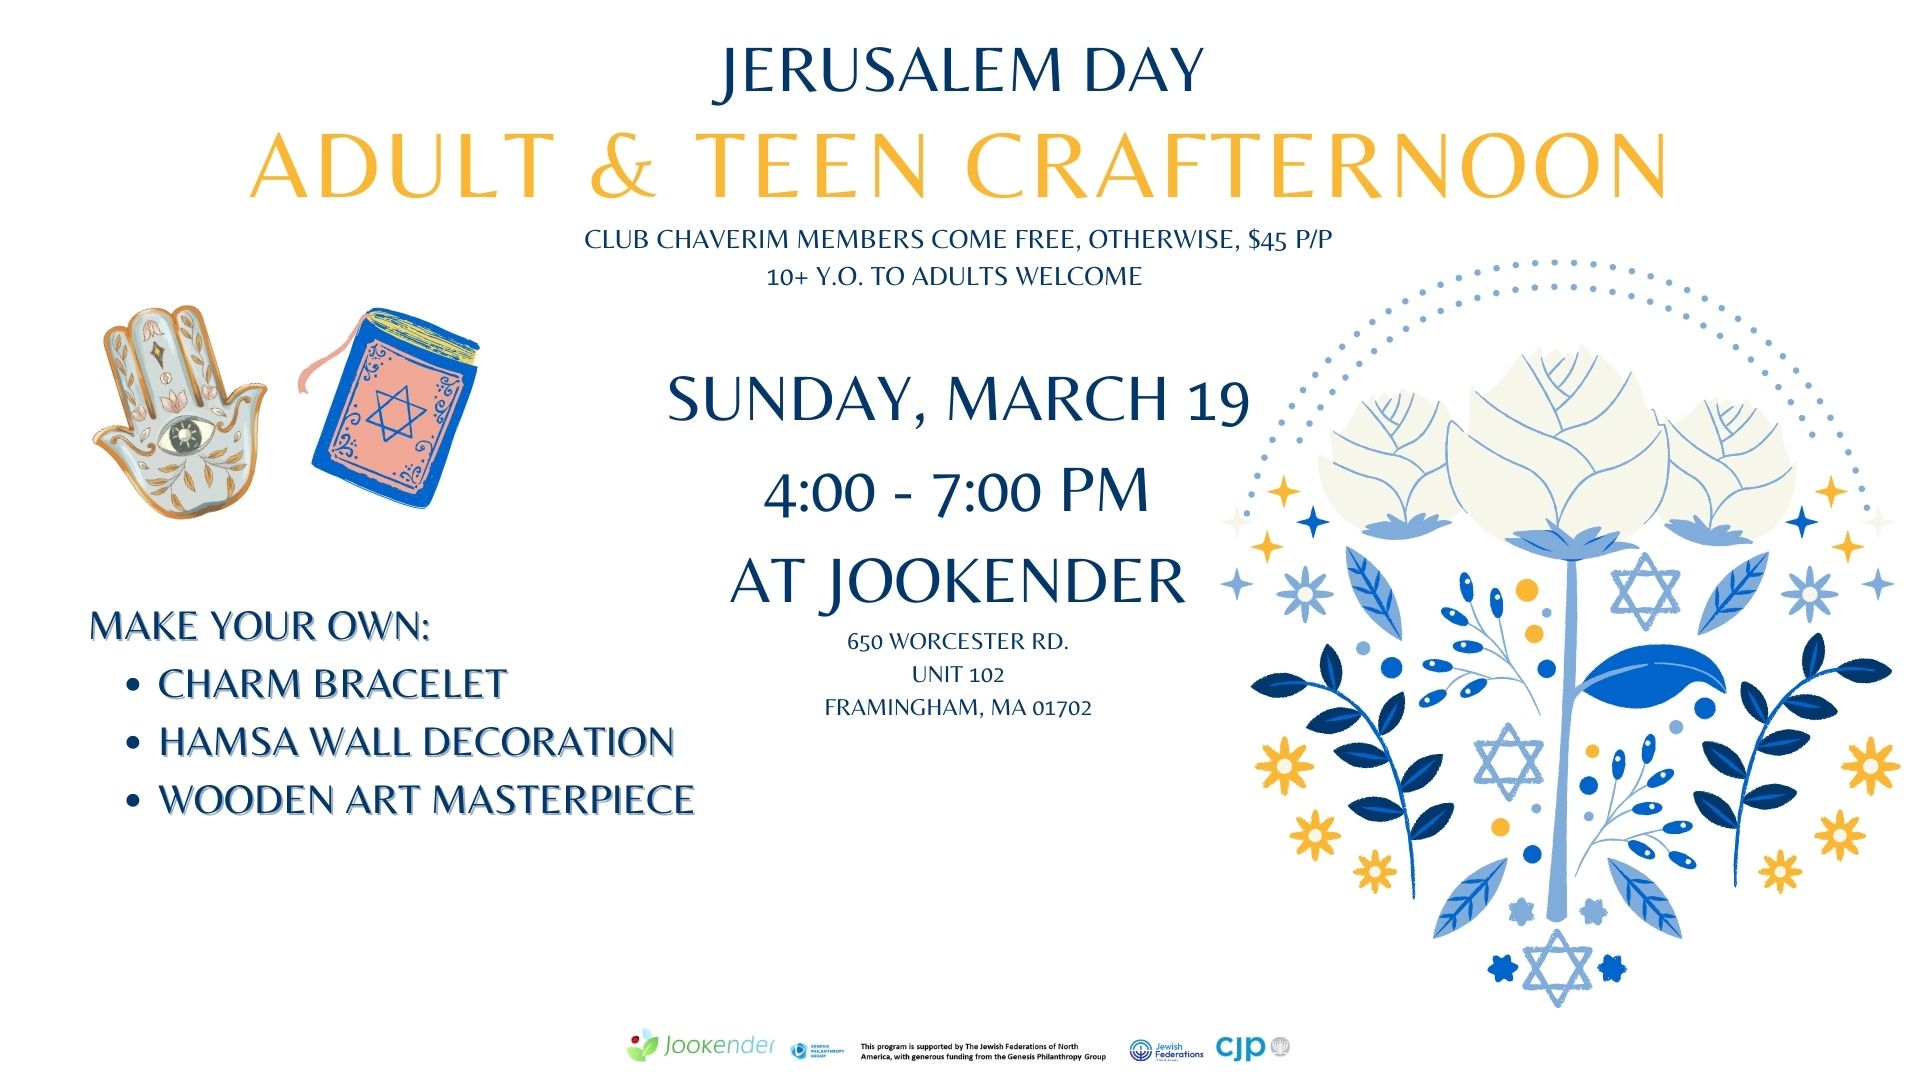 Jerusalem Day Adult & Teen Crafternoon